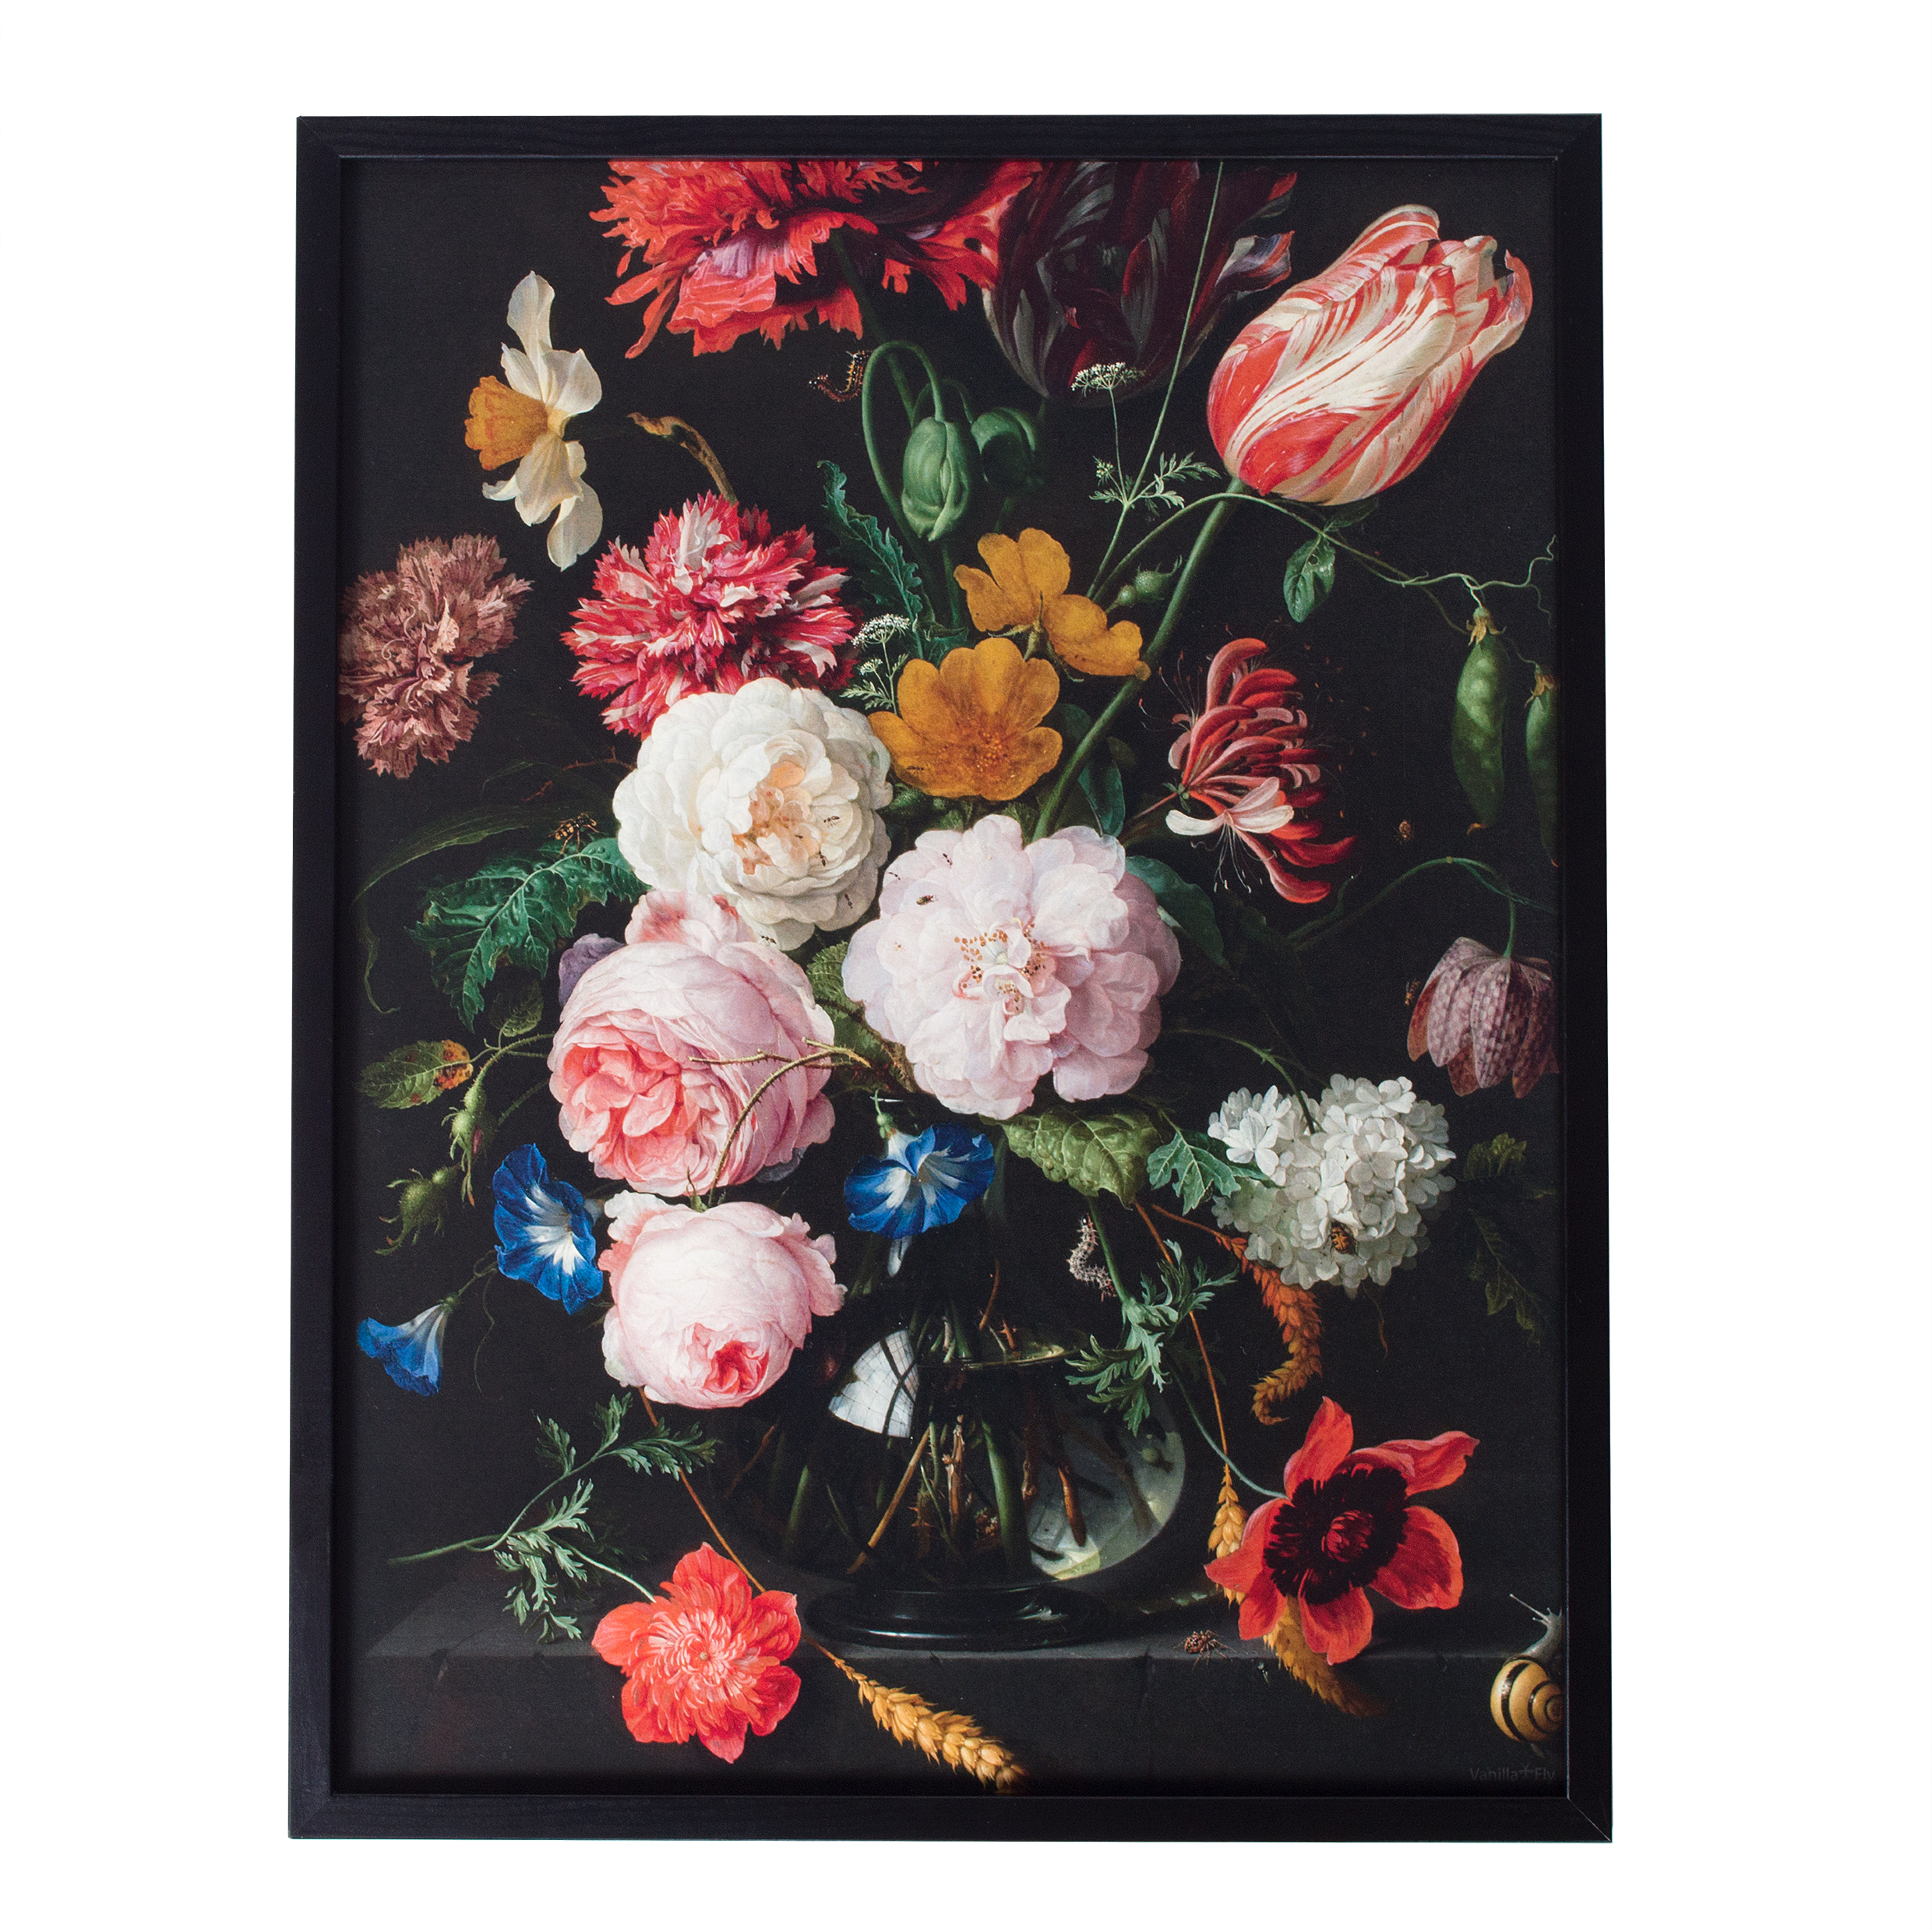   http://www.miafleur.com/floral-still-life-framed-print  